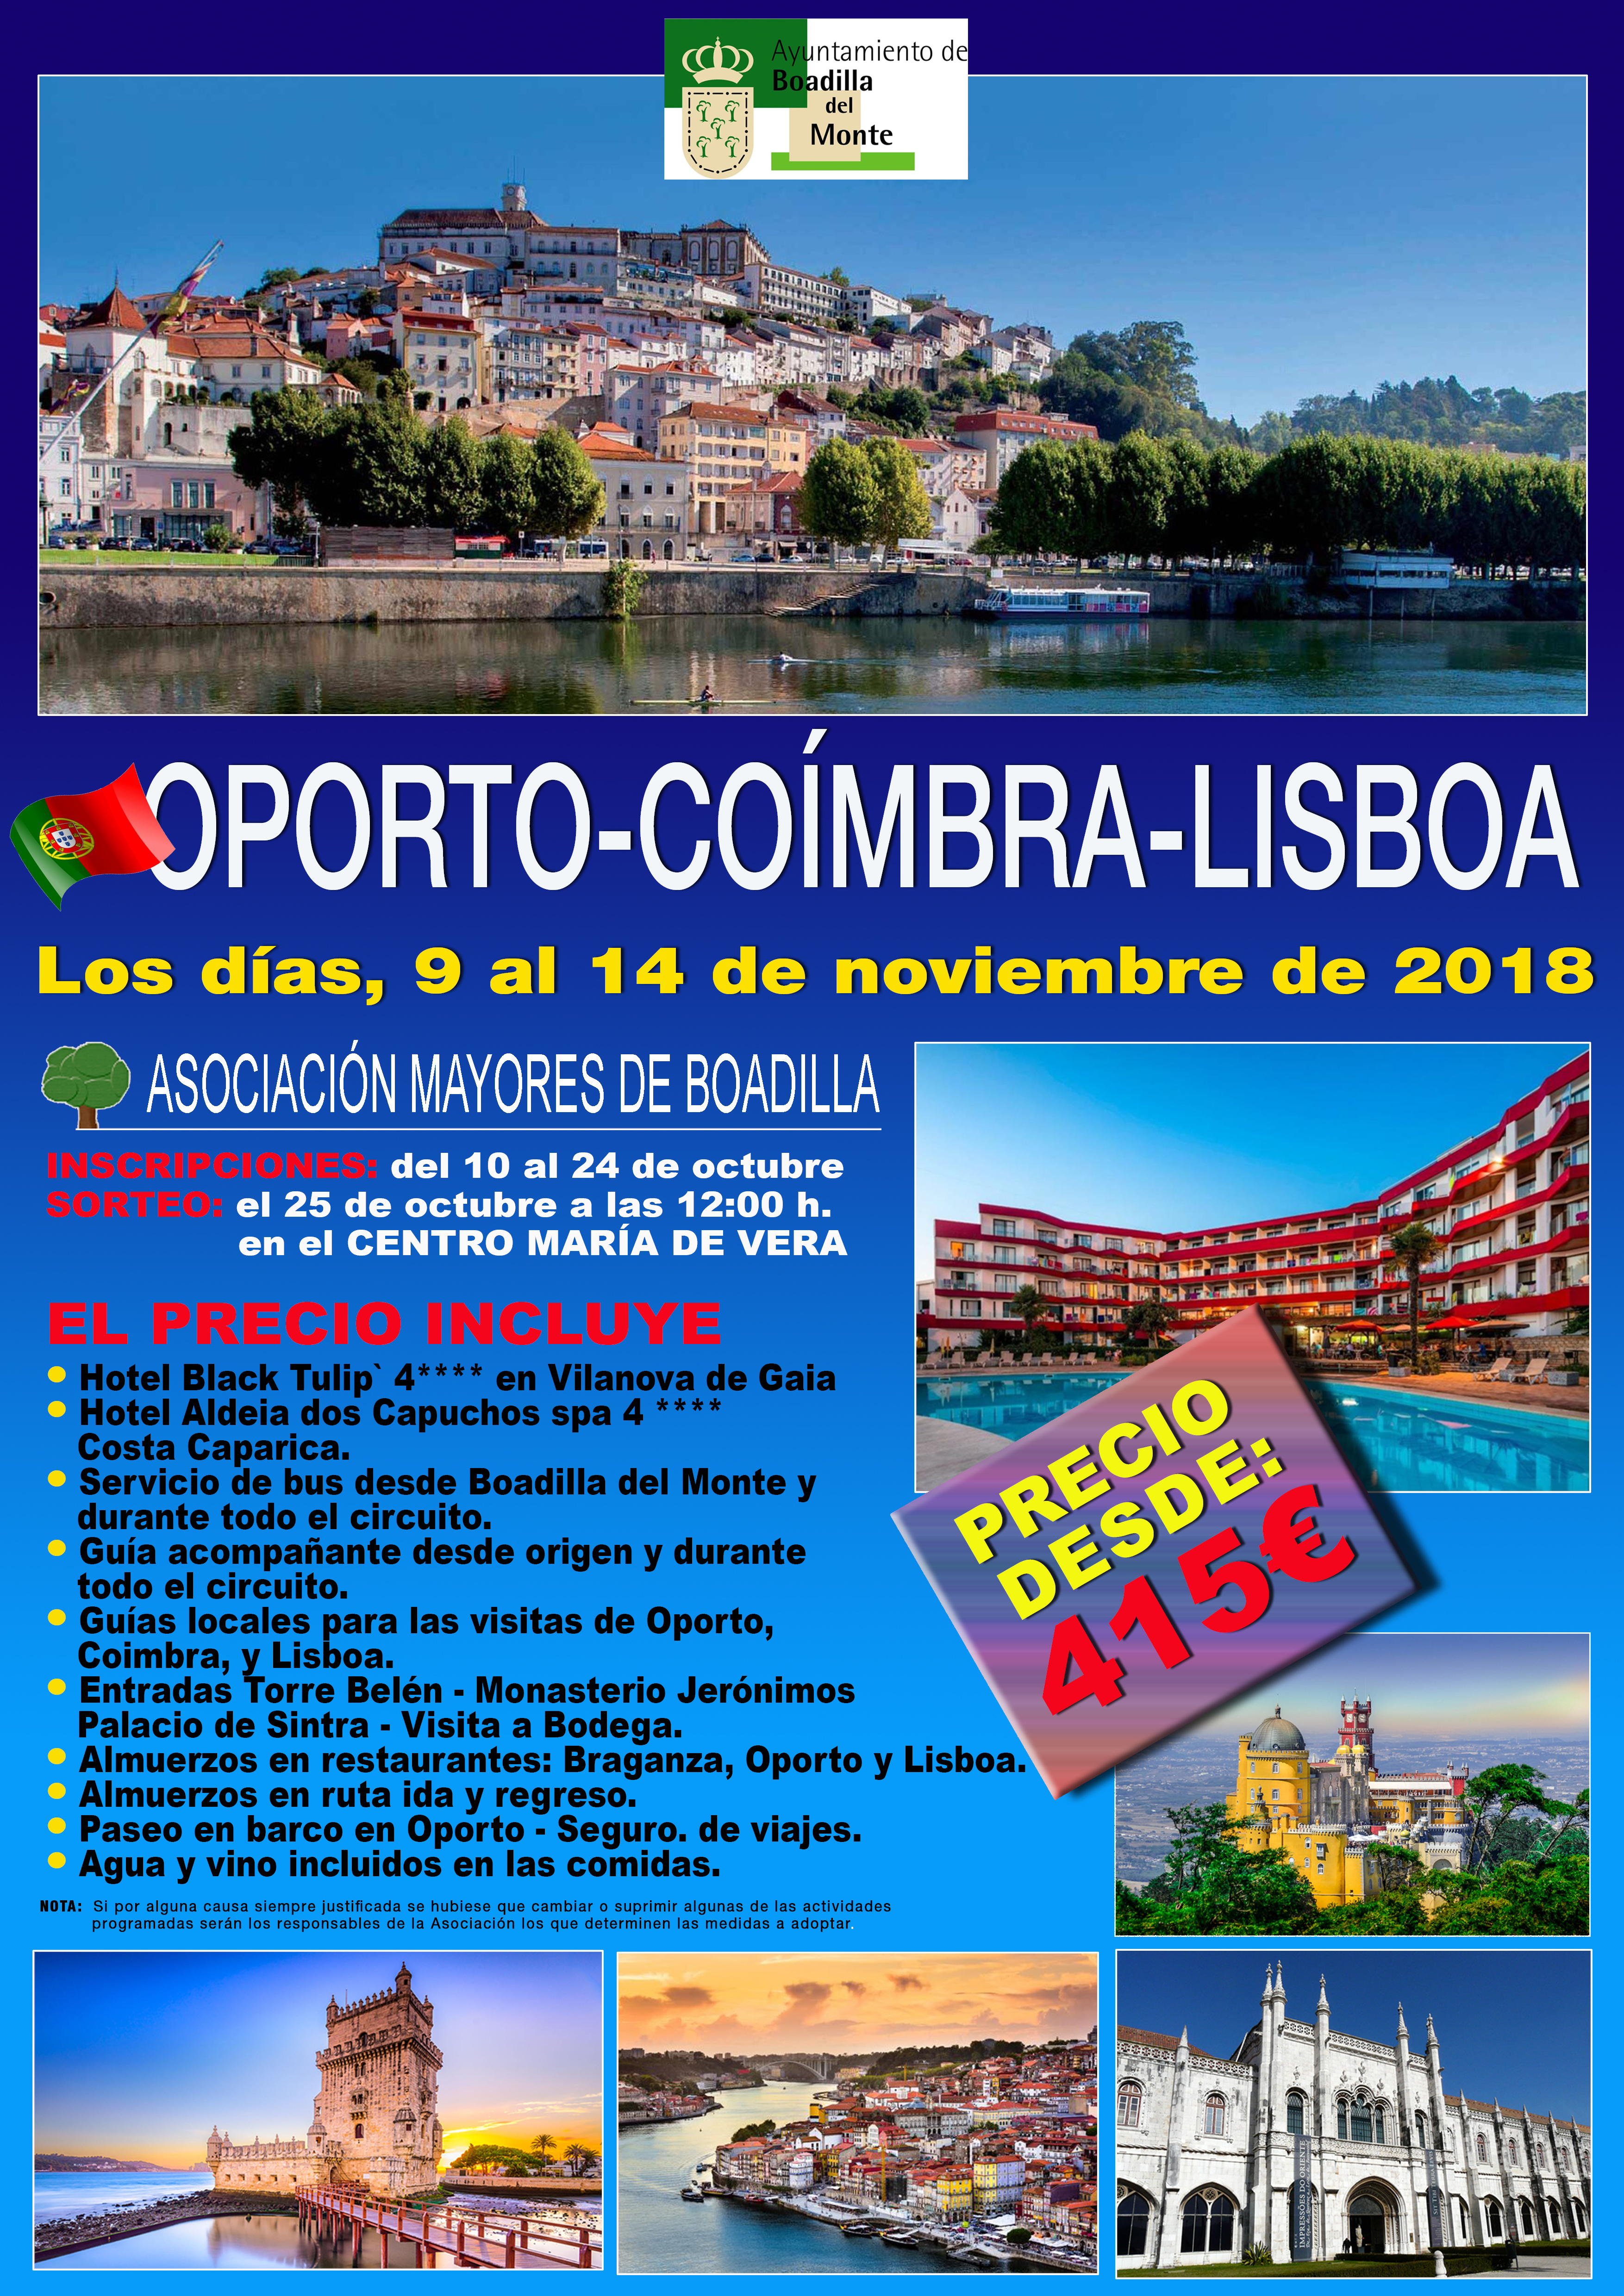 VIAJE A PORTUGAL: OPORTO-COIMBRA-LISBOA (del 9 al 14 de noviembre)